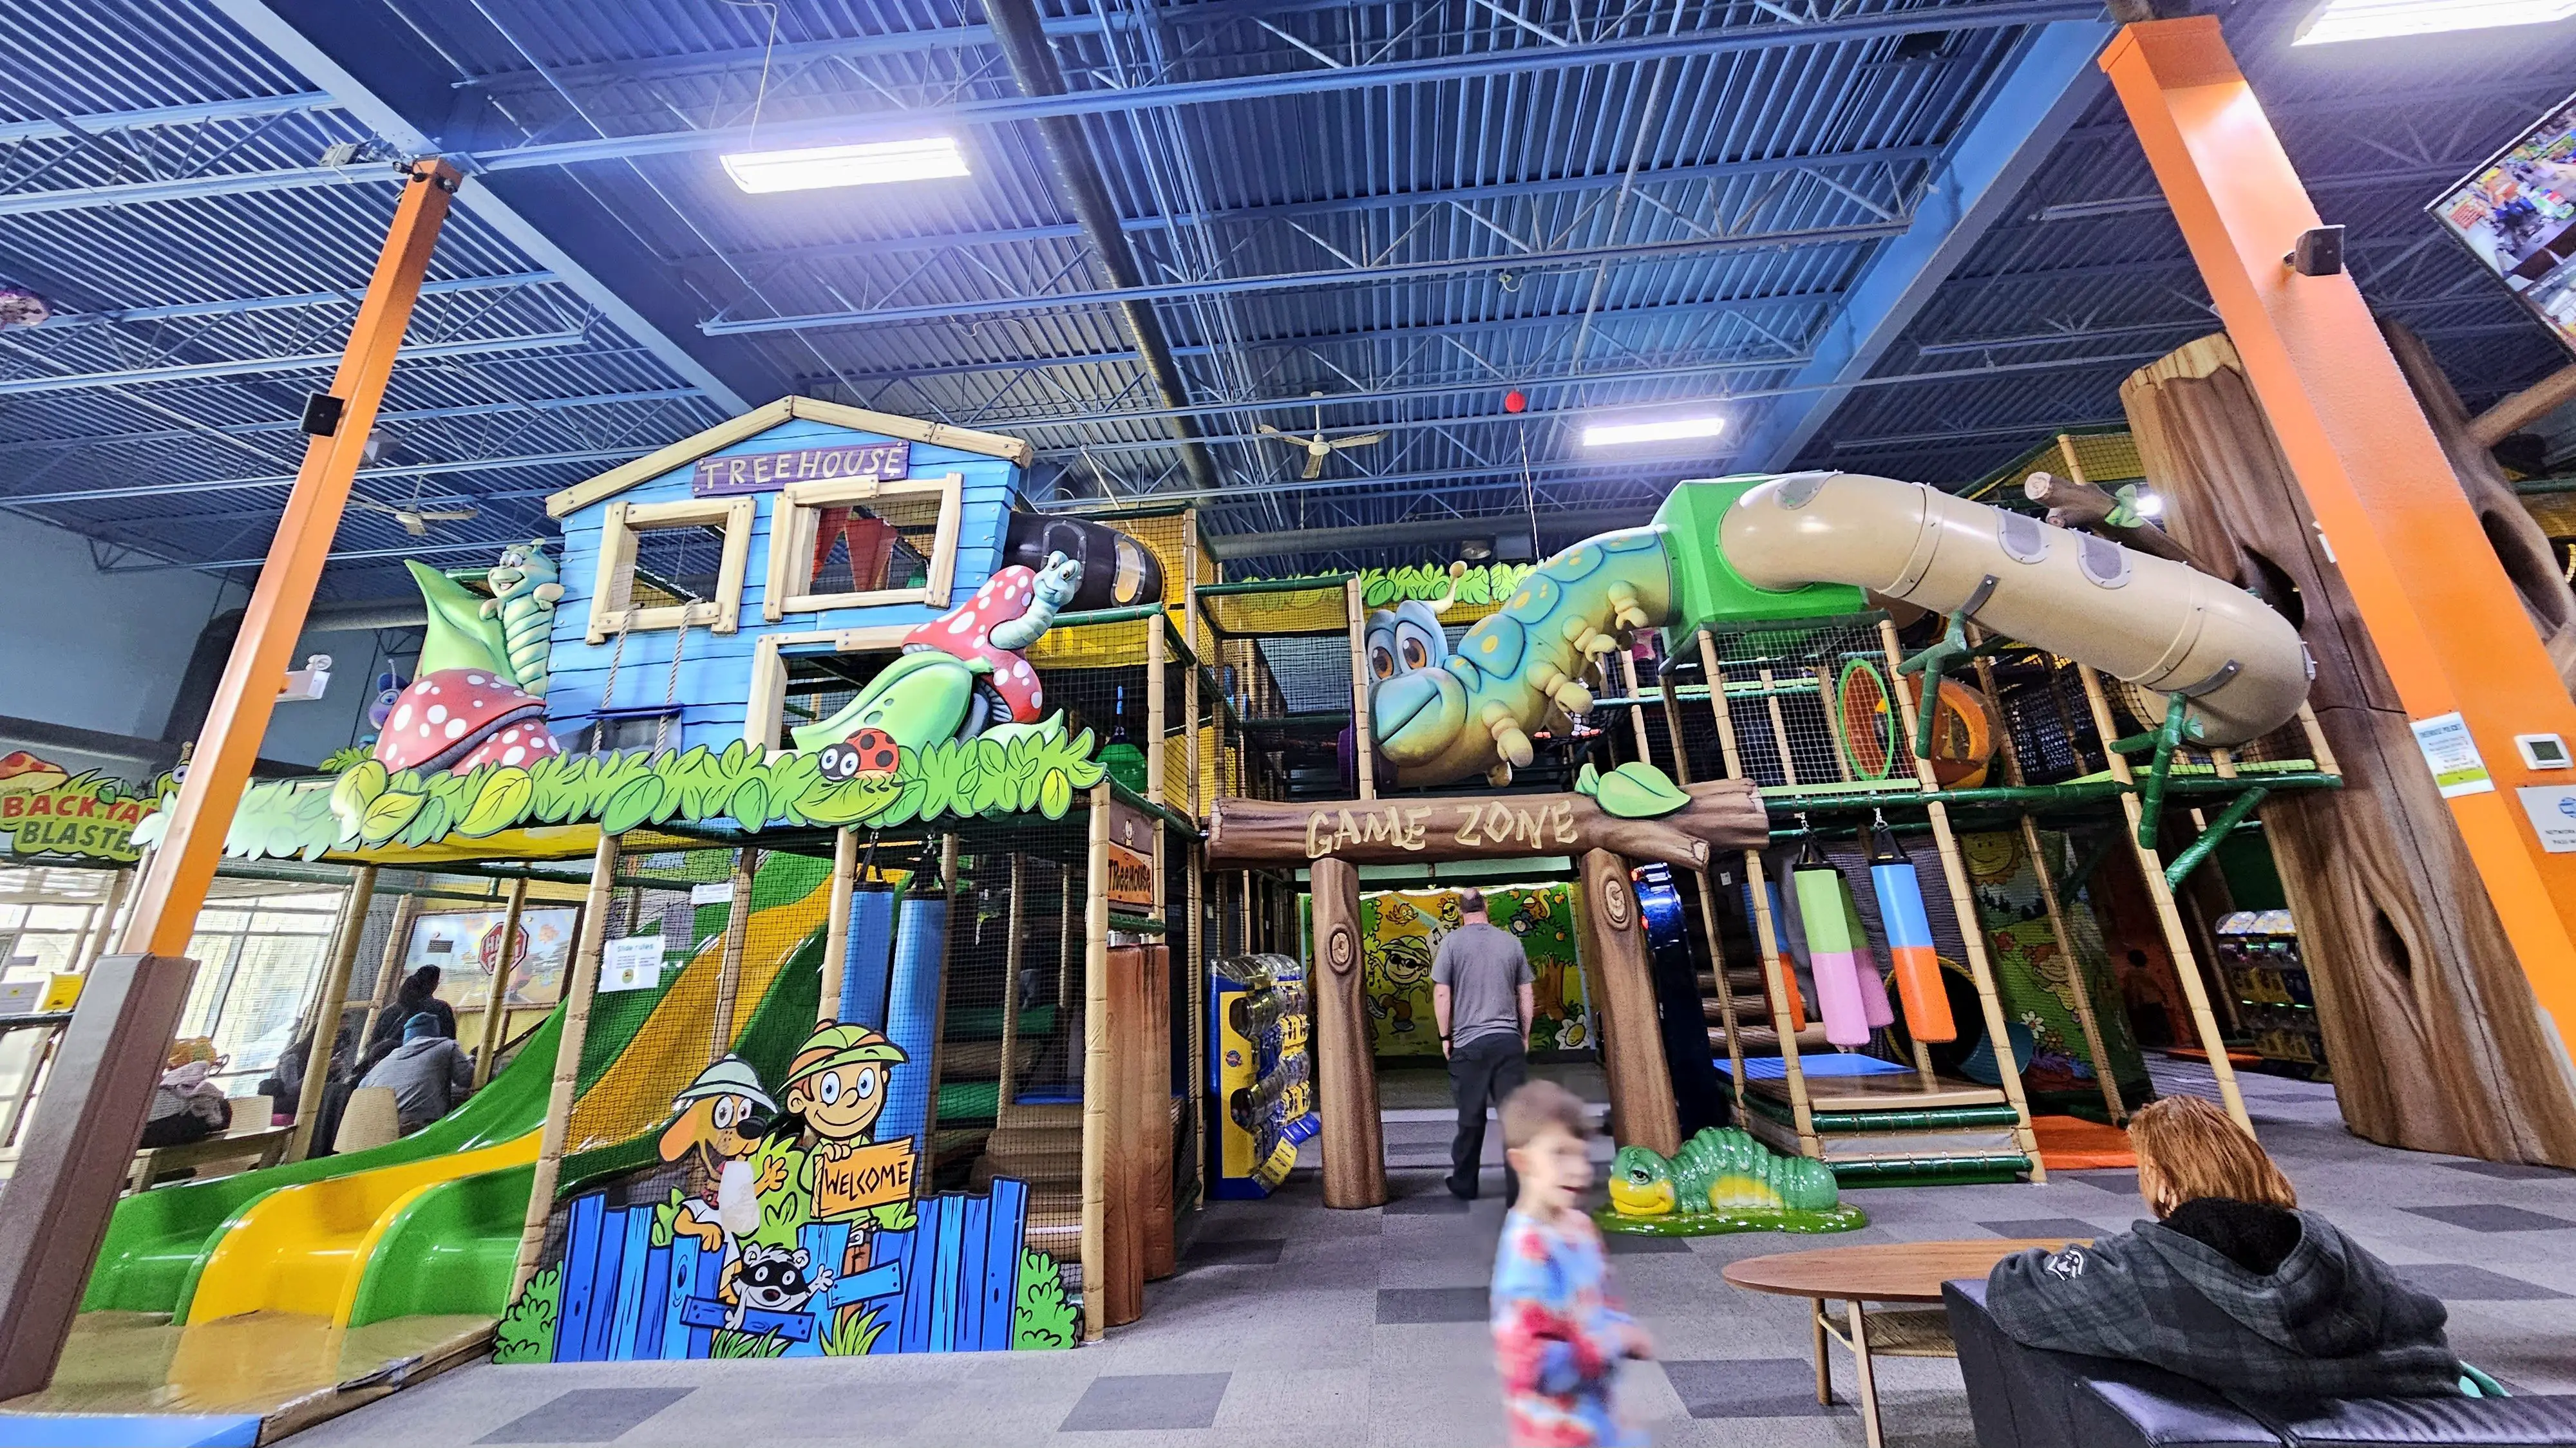 Treehouse Indoor Playground-South Edmonton